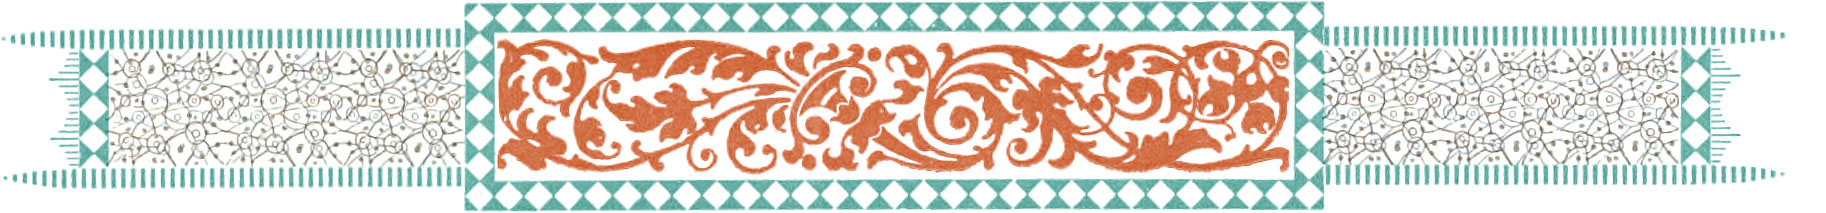 Ornate border comprising orange and teal colors